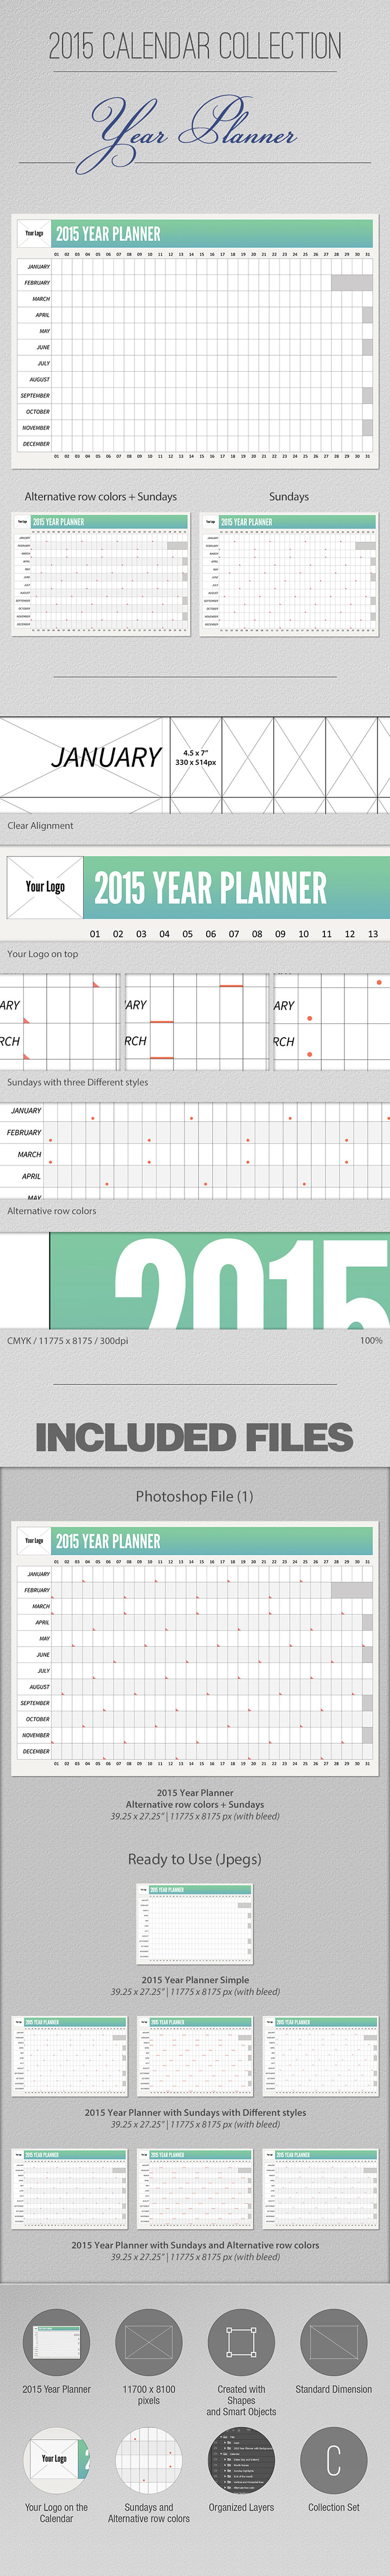 2015 Calendar Collection - Year Planner.jpg